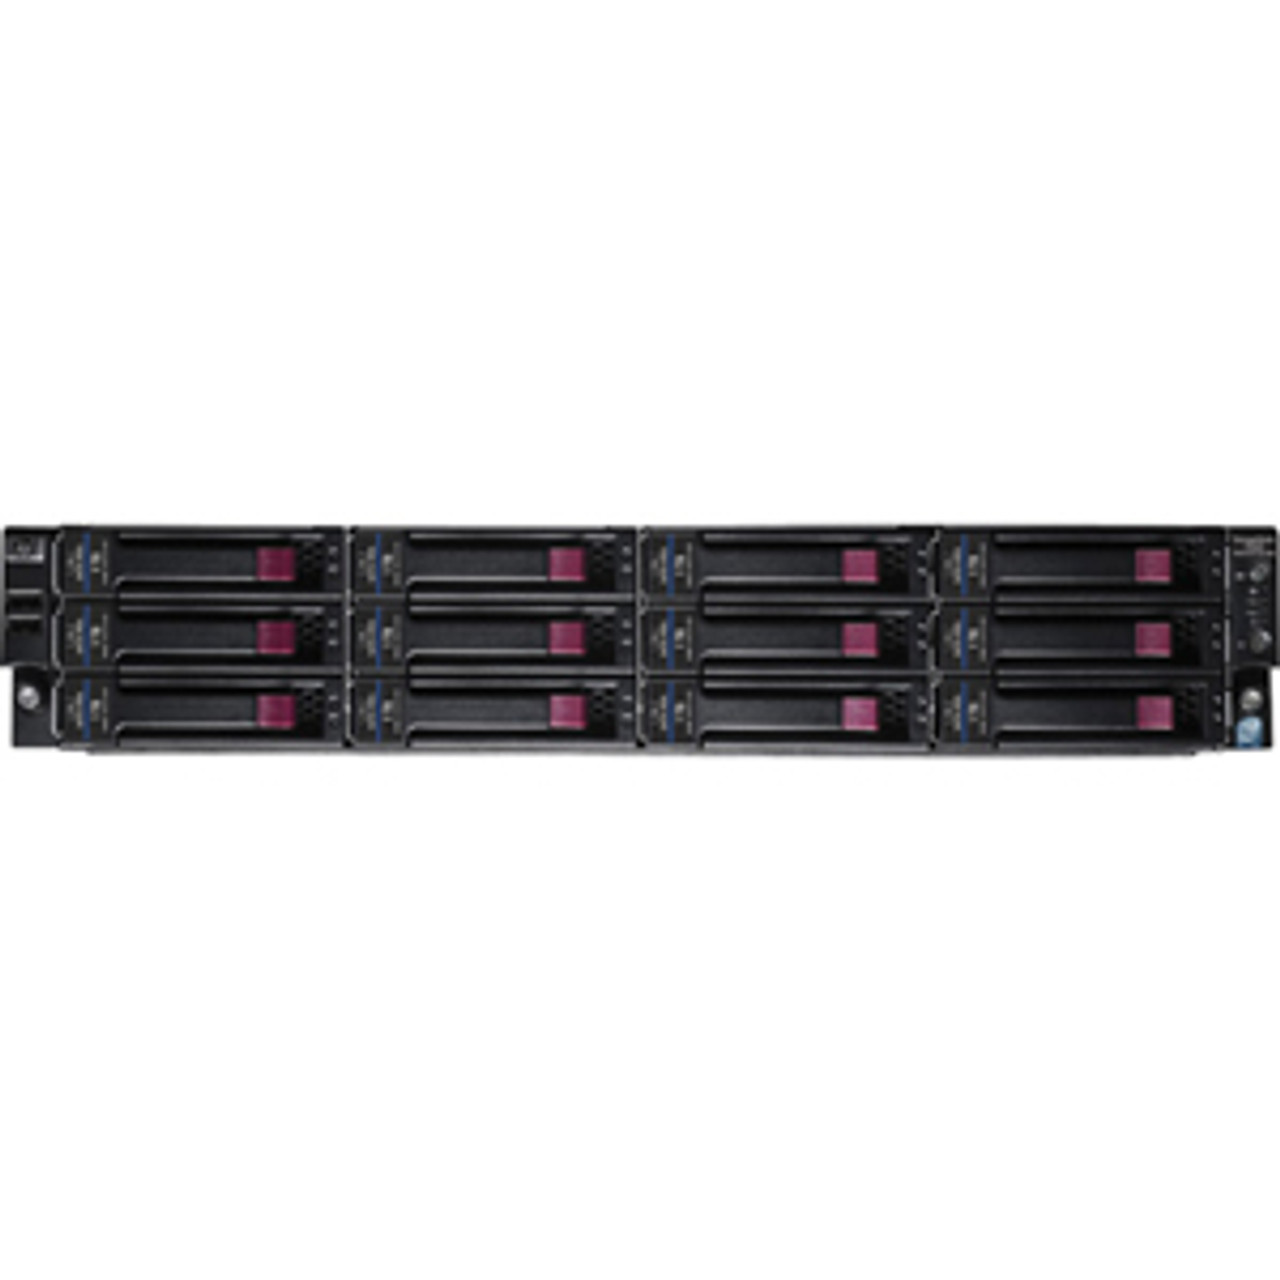 BK775A - HP StorageWorks X1600 Network Storage Server 1 x Intel Xeon E5520 2.26 GHz 3 TB (10 x 300 GB) USB RJ-45 Network HD-15 VGA Serial